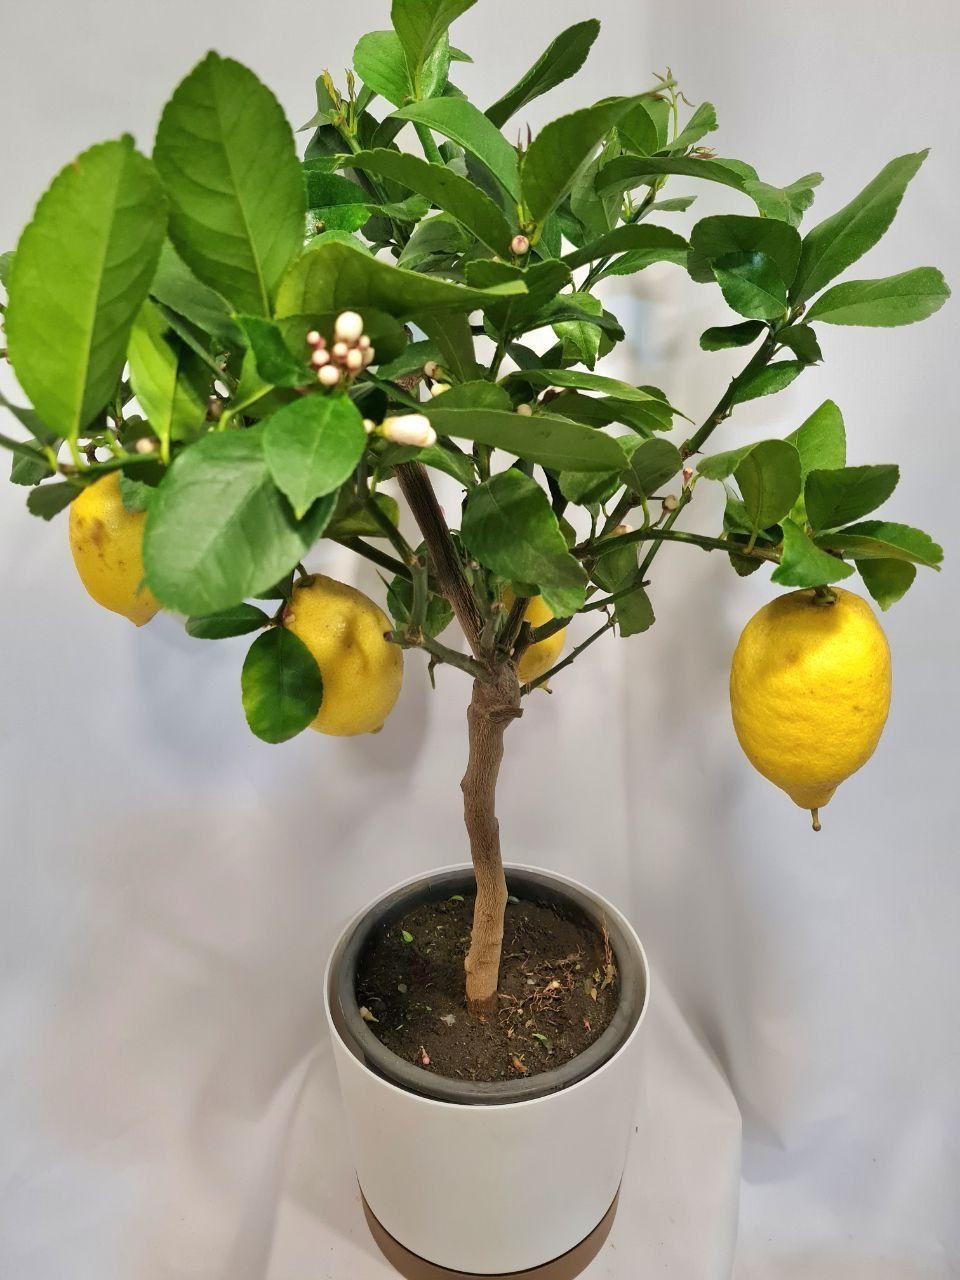 Дерево лимона. Лимон с плодами. Лимон. Цитрус лимон